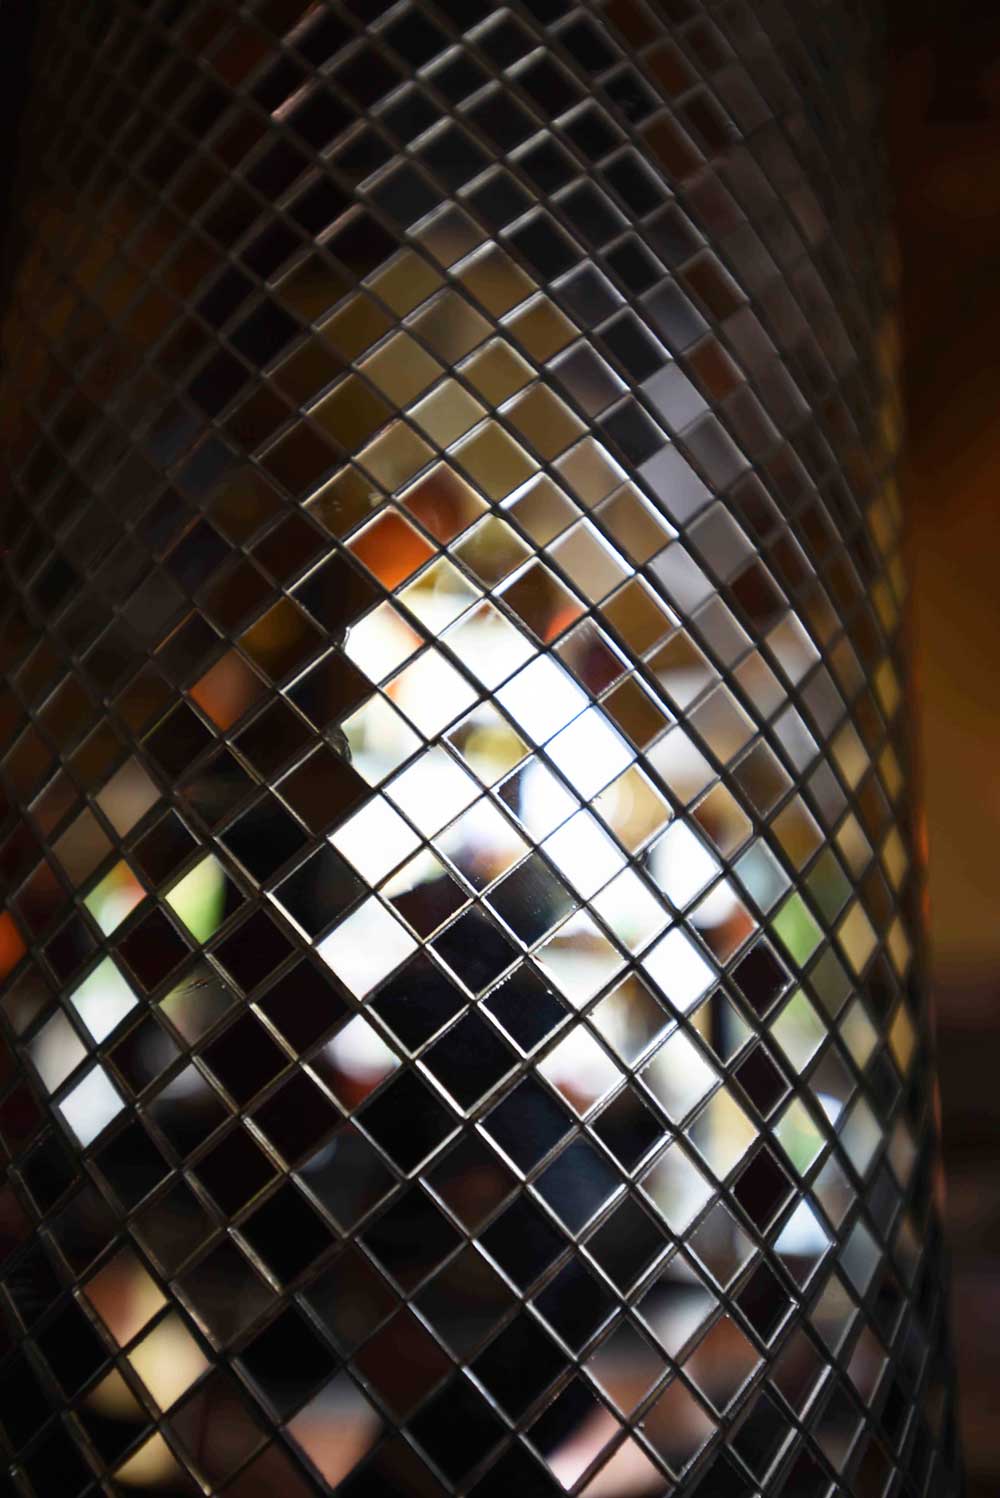 The gorgeous mirrored mosaic column harkens to France's art deco era